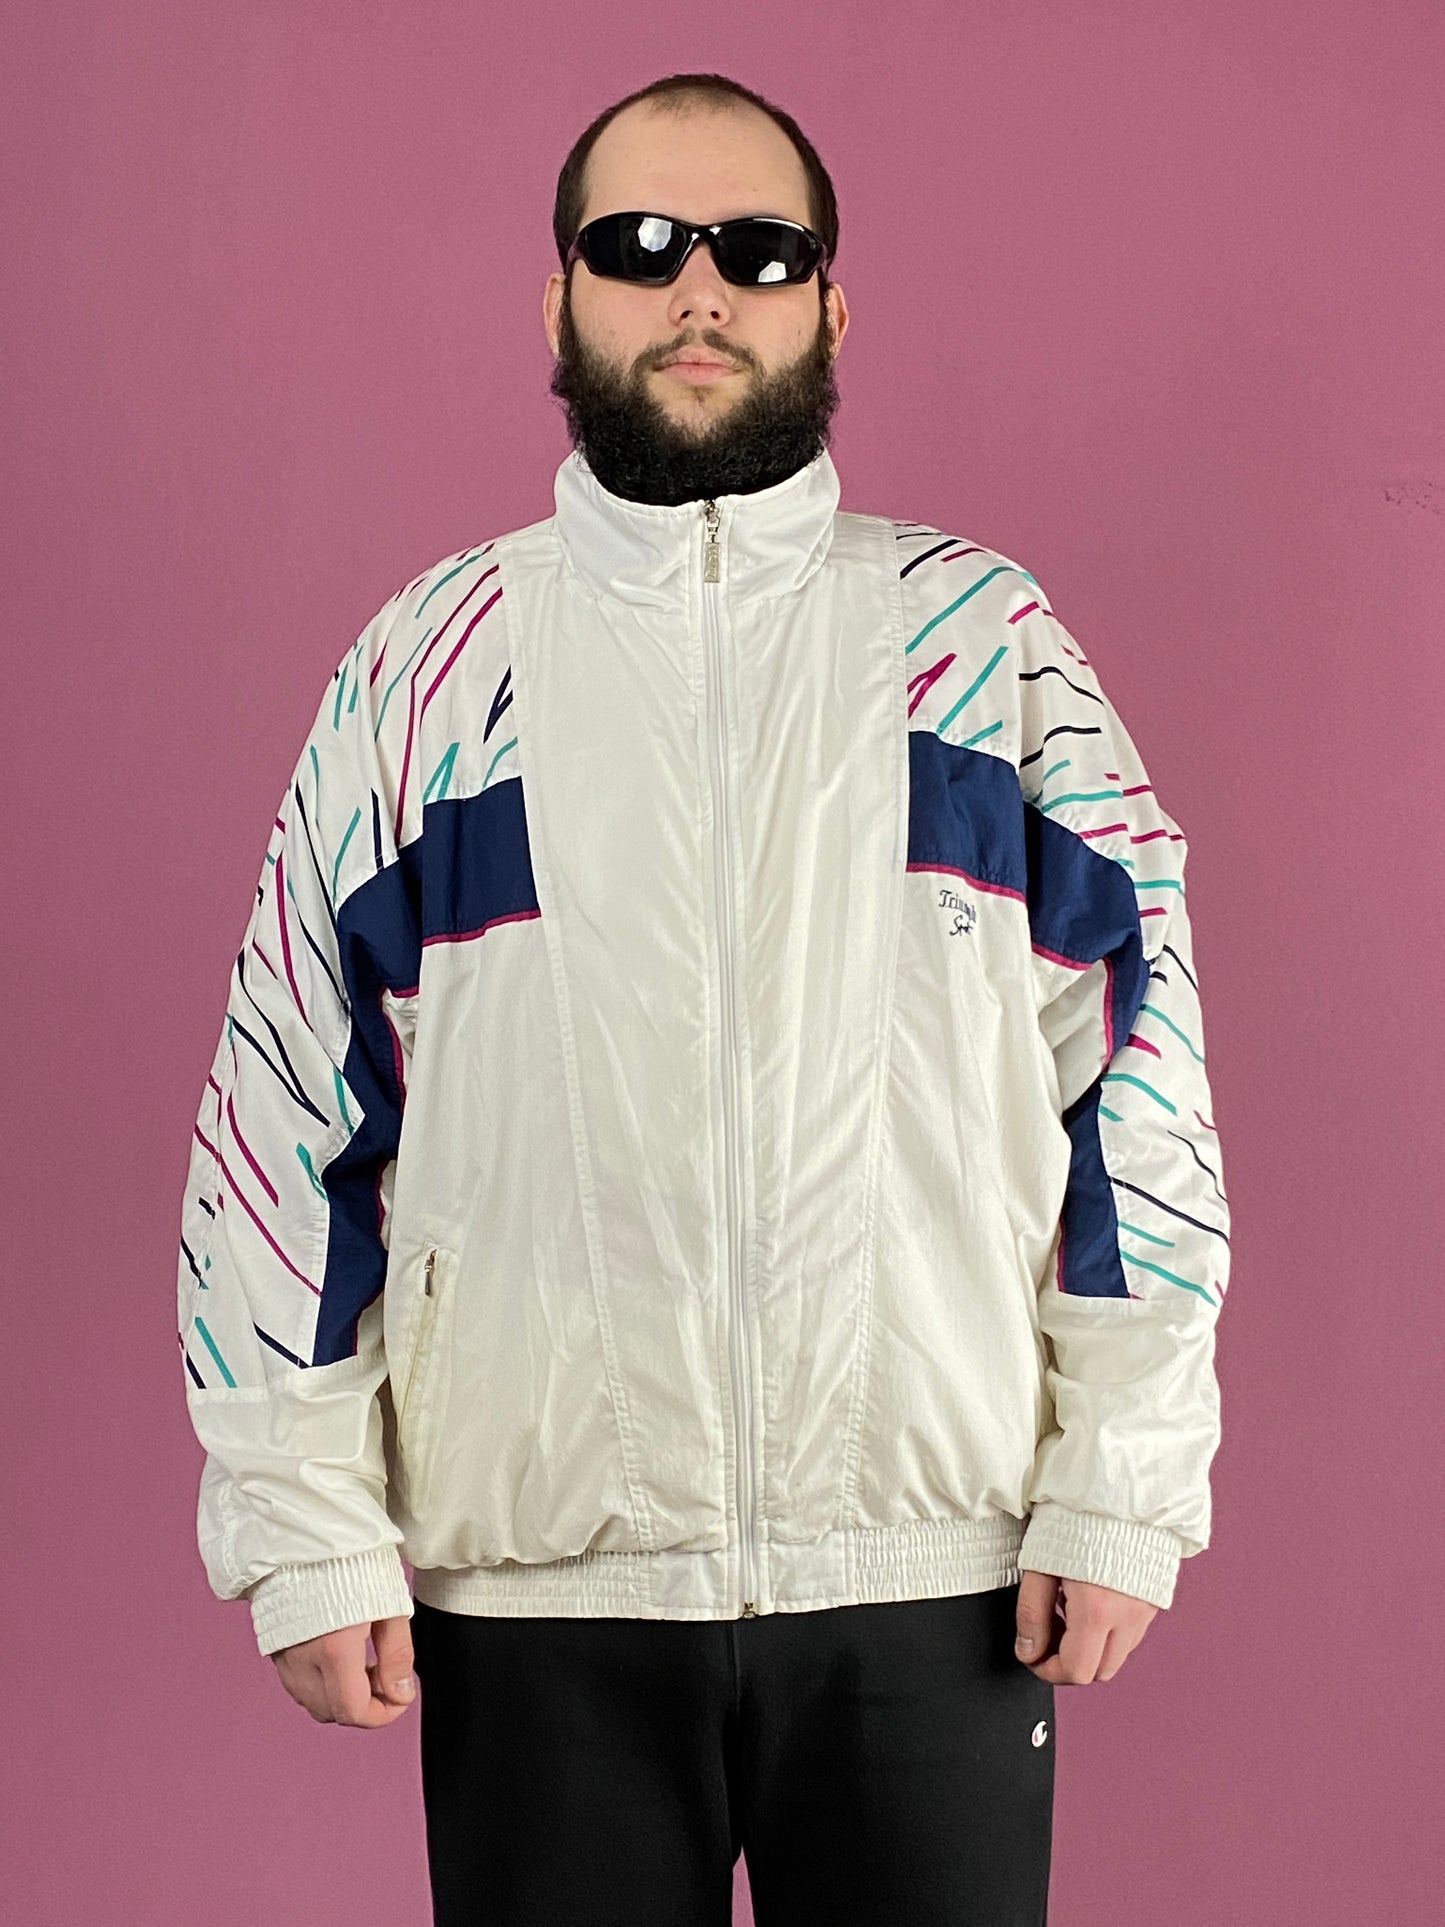 90s Vintage Men's Windbreaker Jacket - XL White Polyester